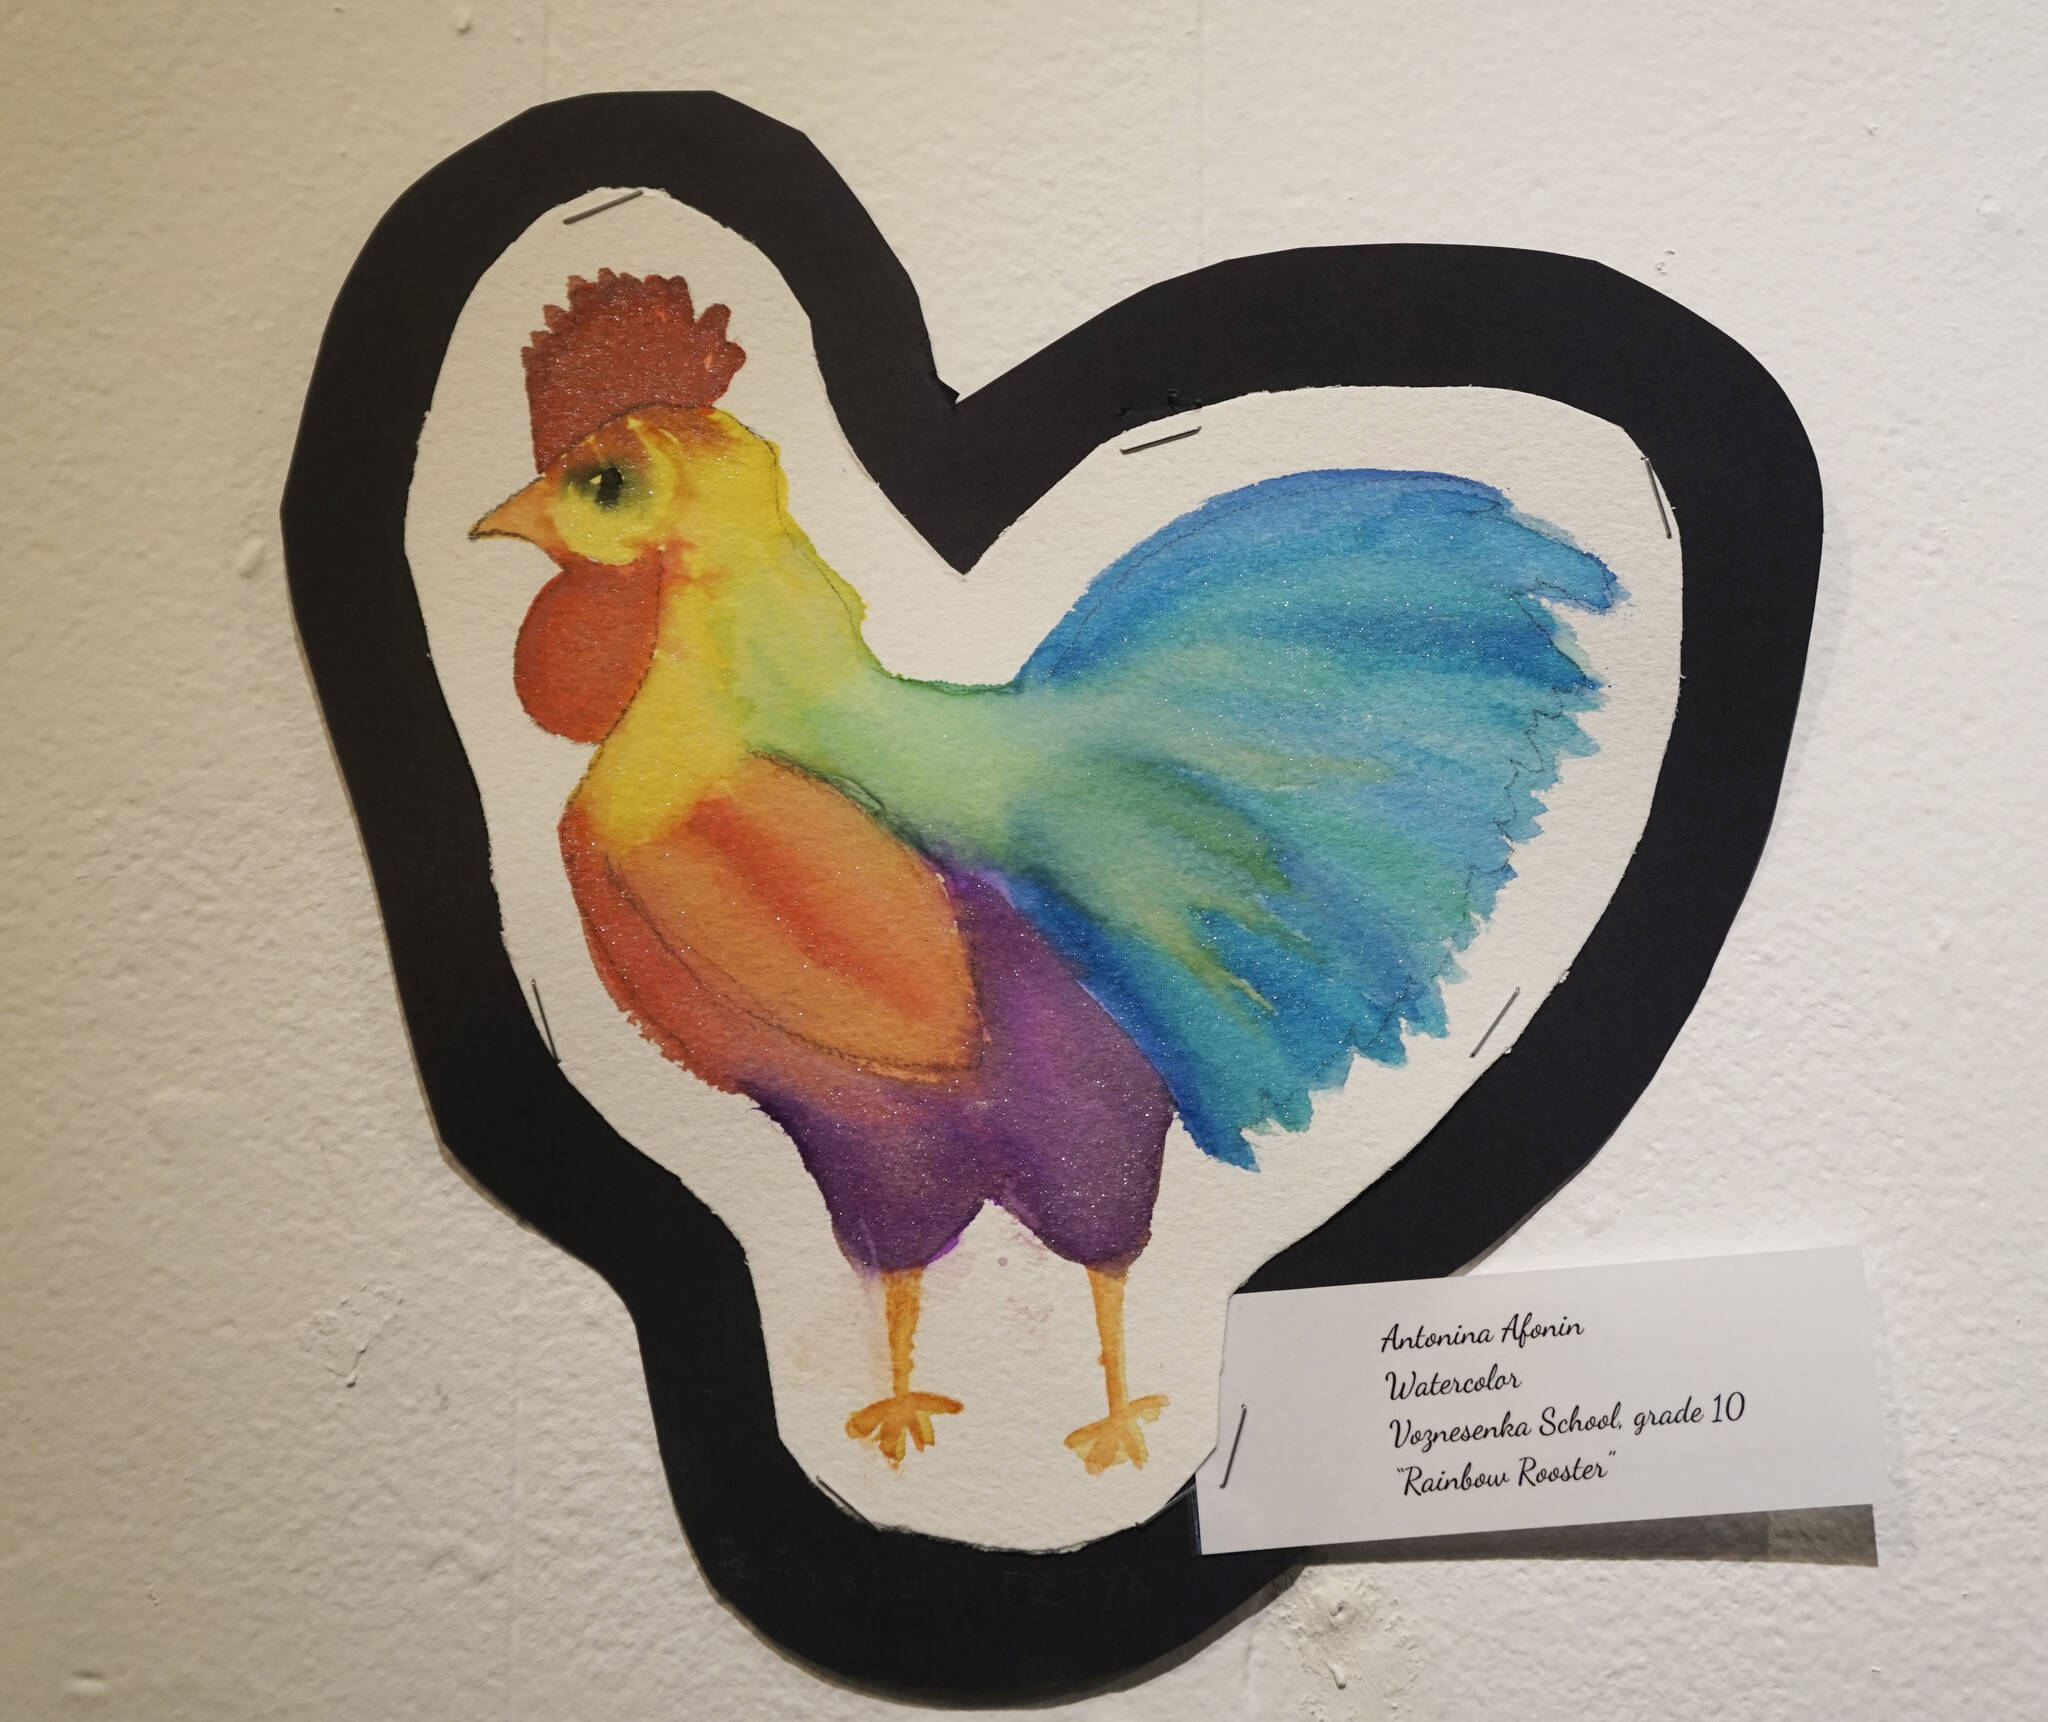 Grade 10 Voznesenka School student Antonia Afonin’s “Rainbow rooster.” (Photo by Michael Armstrong/Homer News)